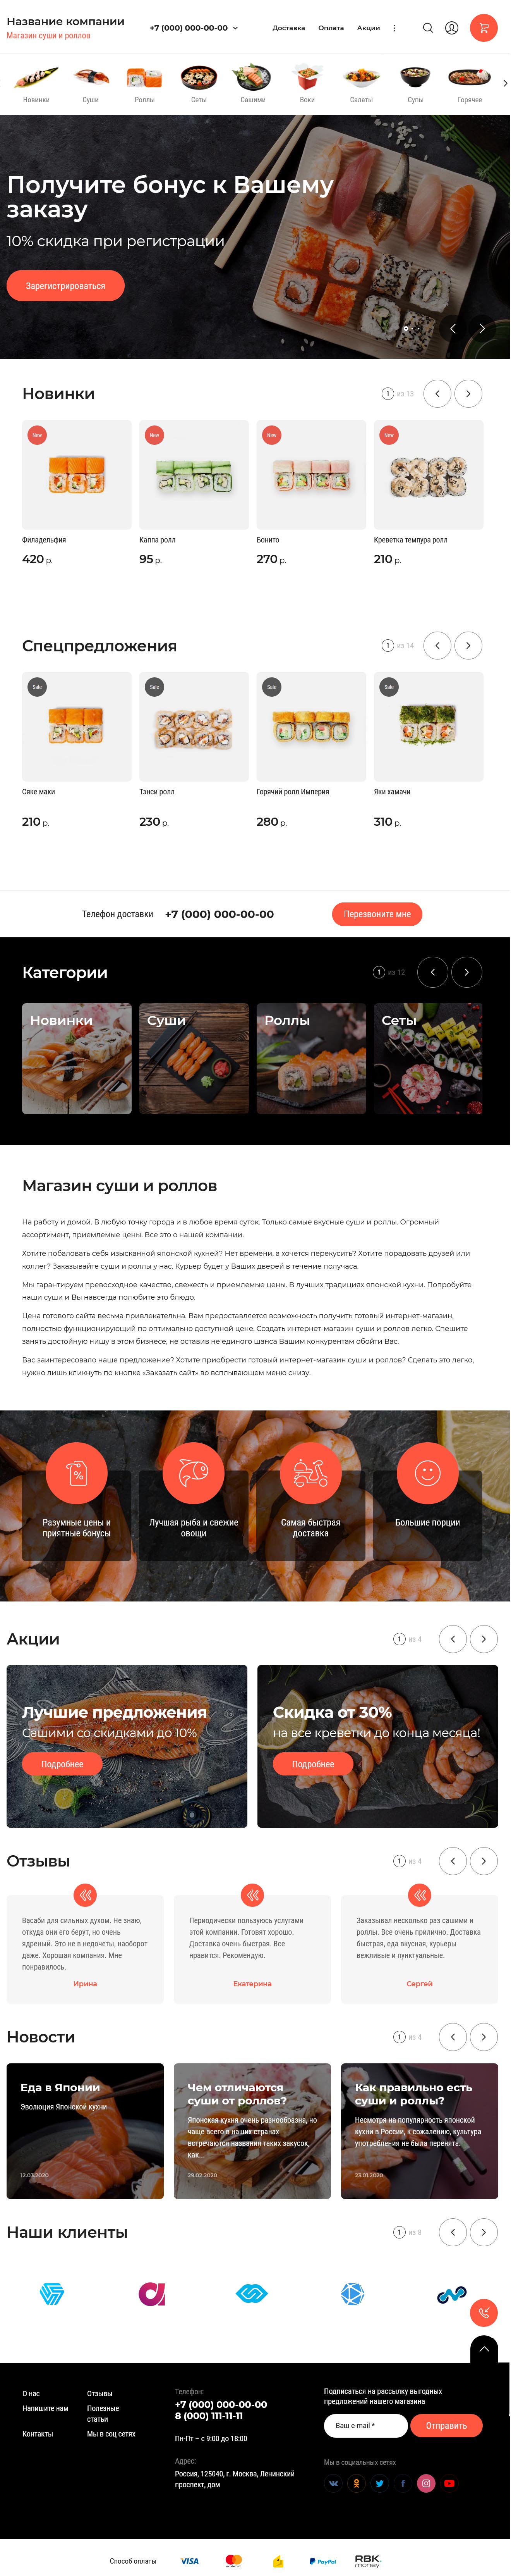 Интернет магазин роллов и суши